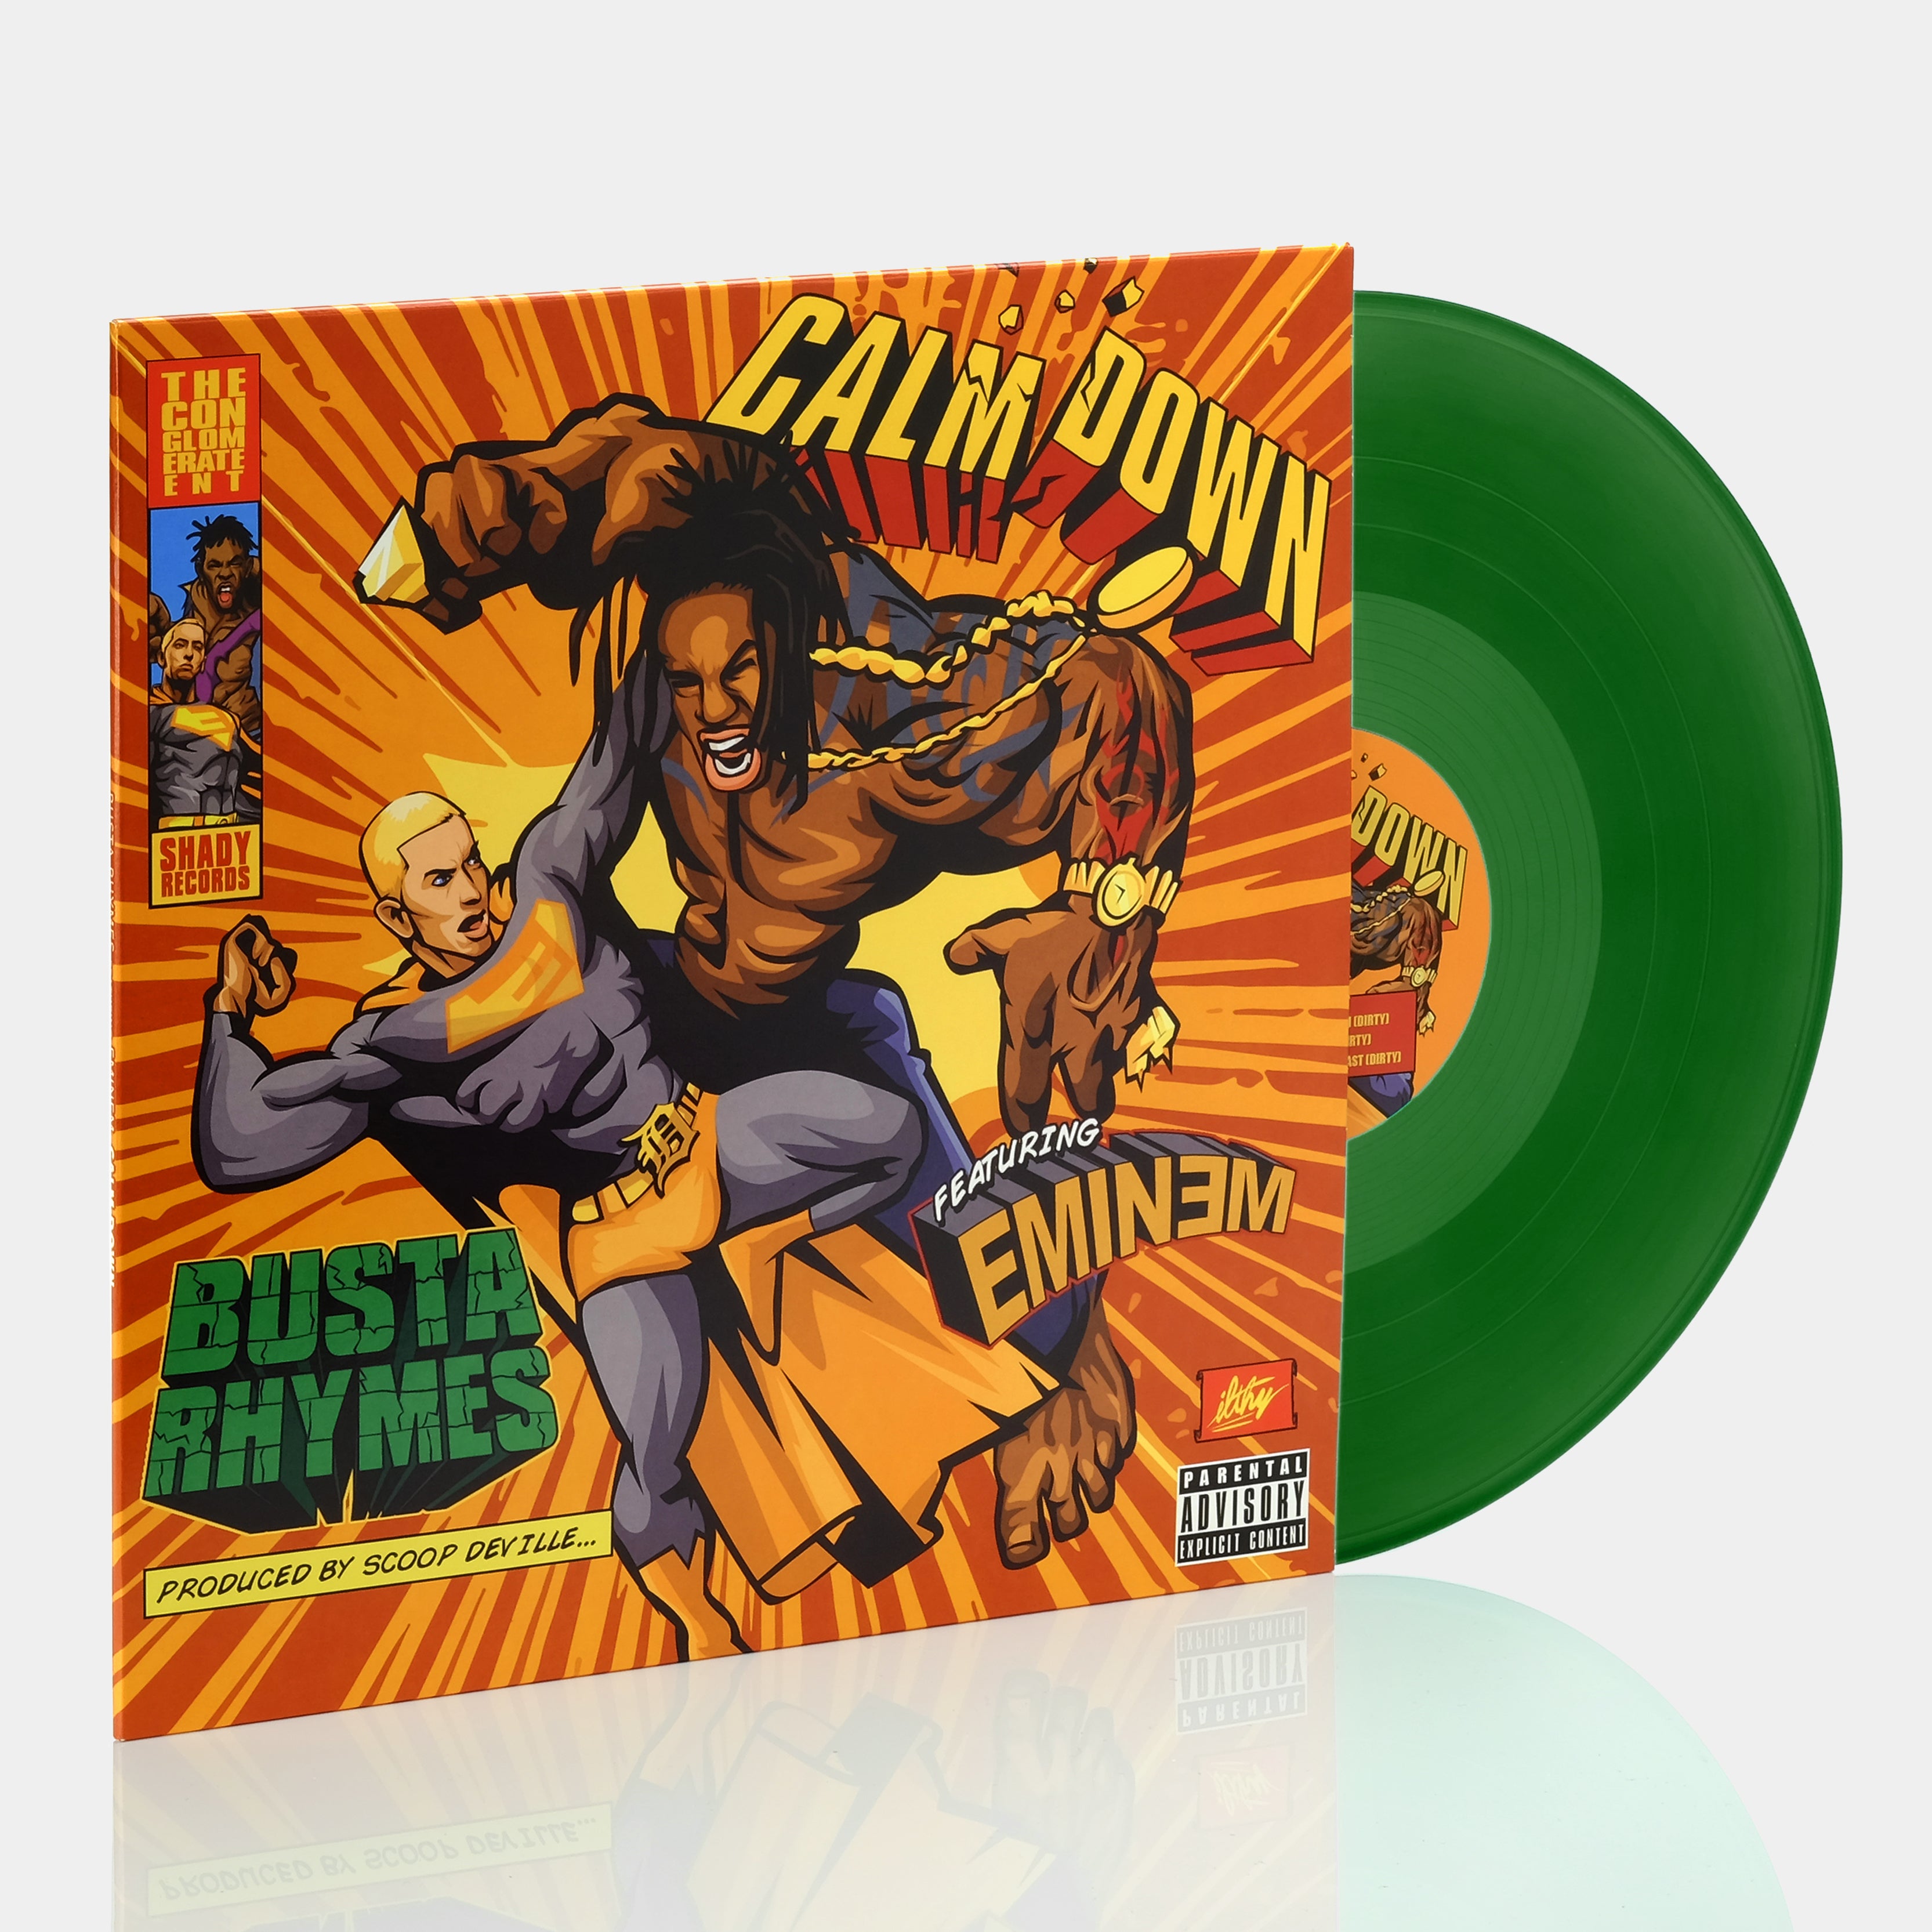 Busta Rhymes & Eminem - Calm Down 12" Single Green Vinyl Record